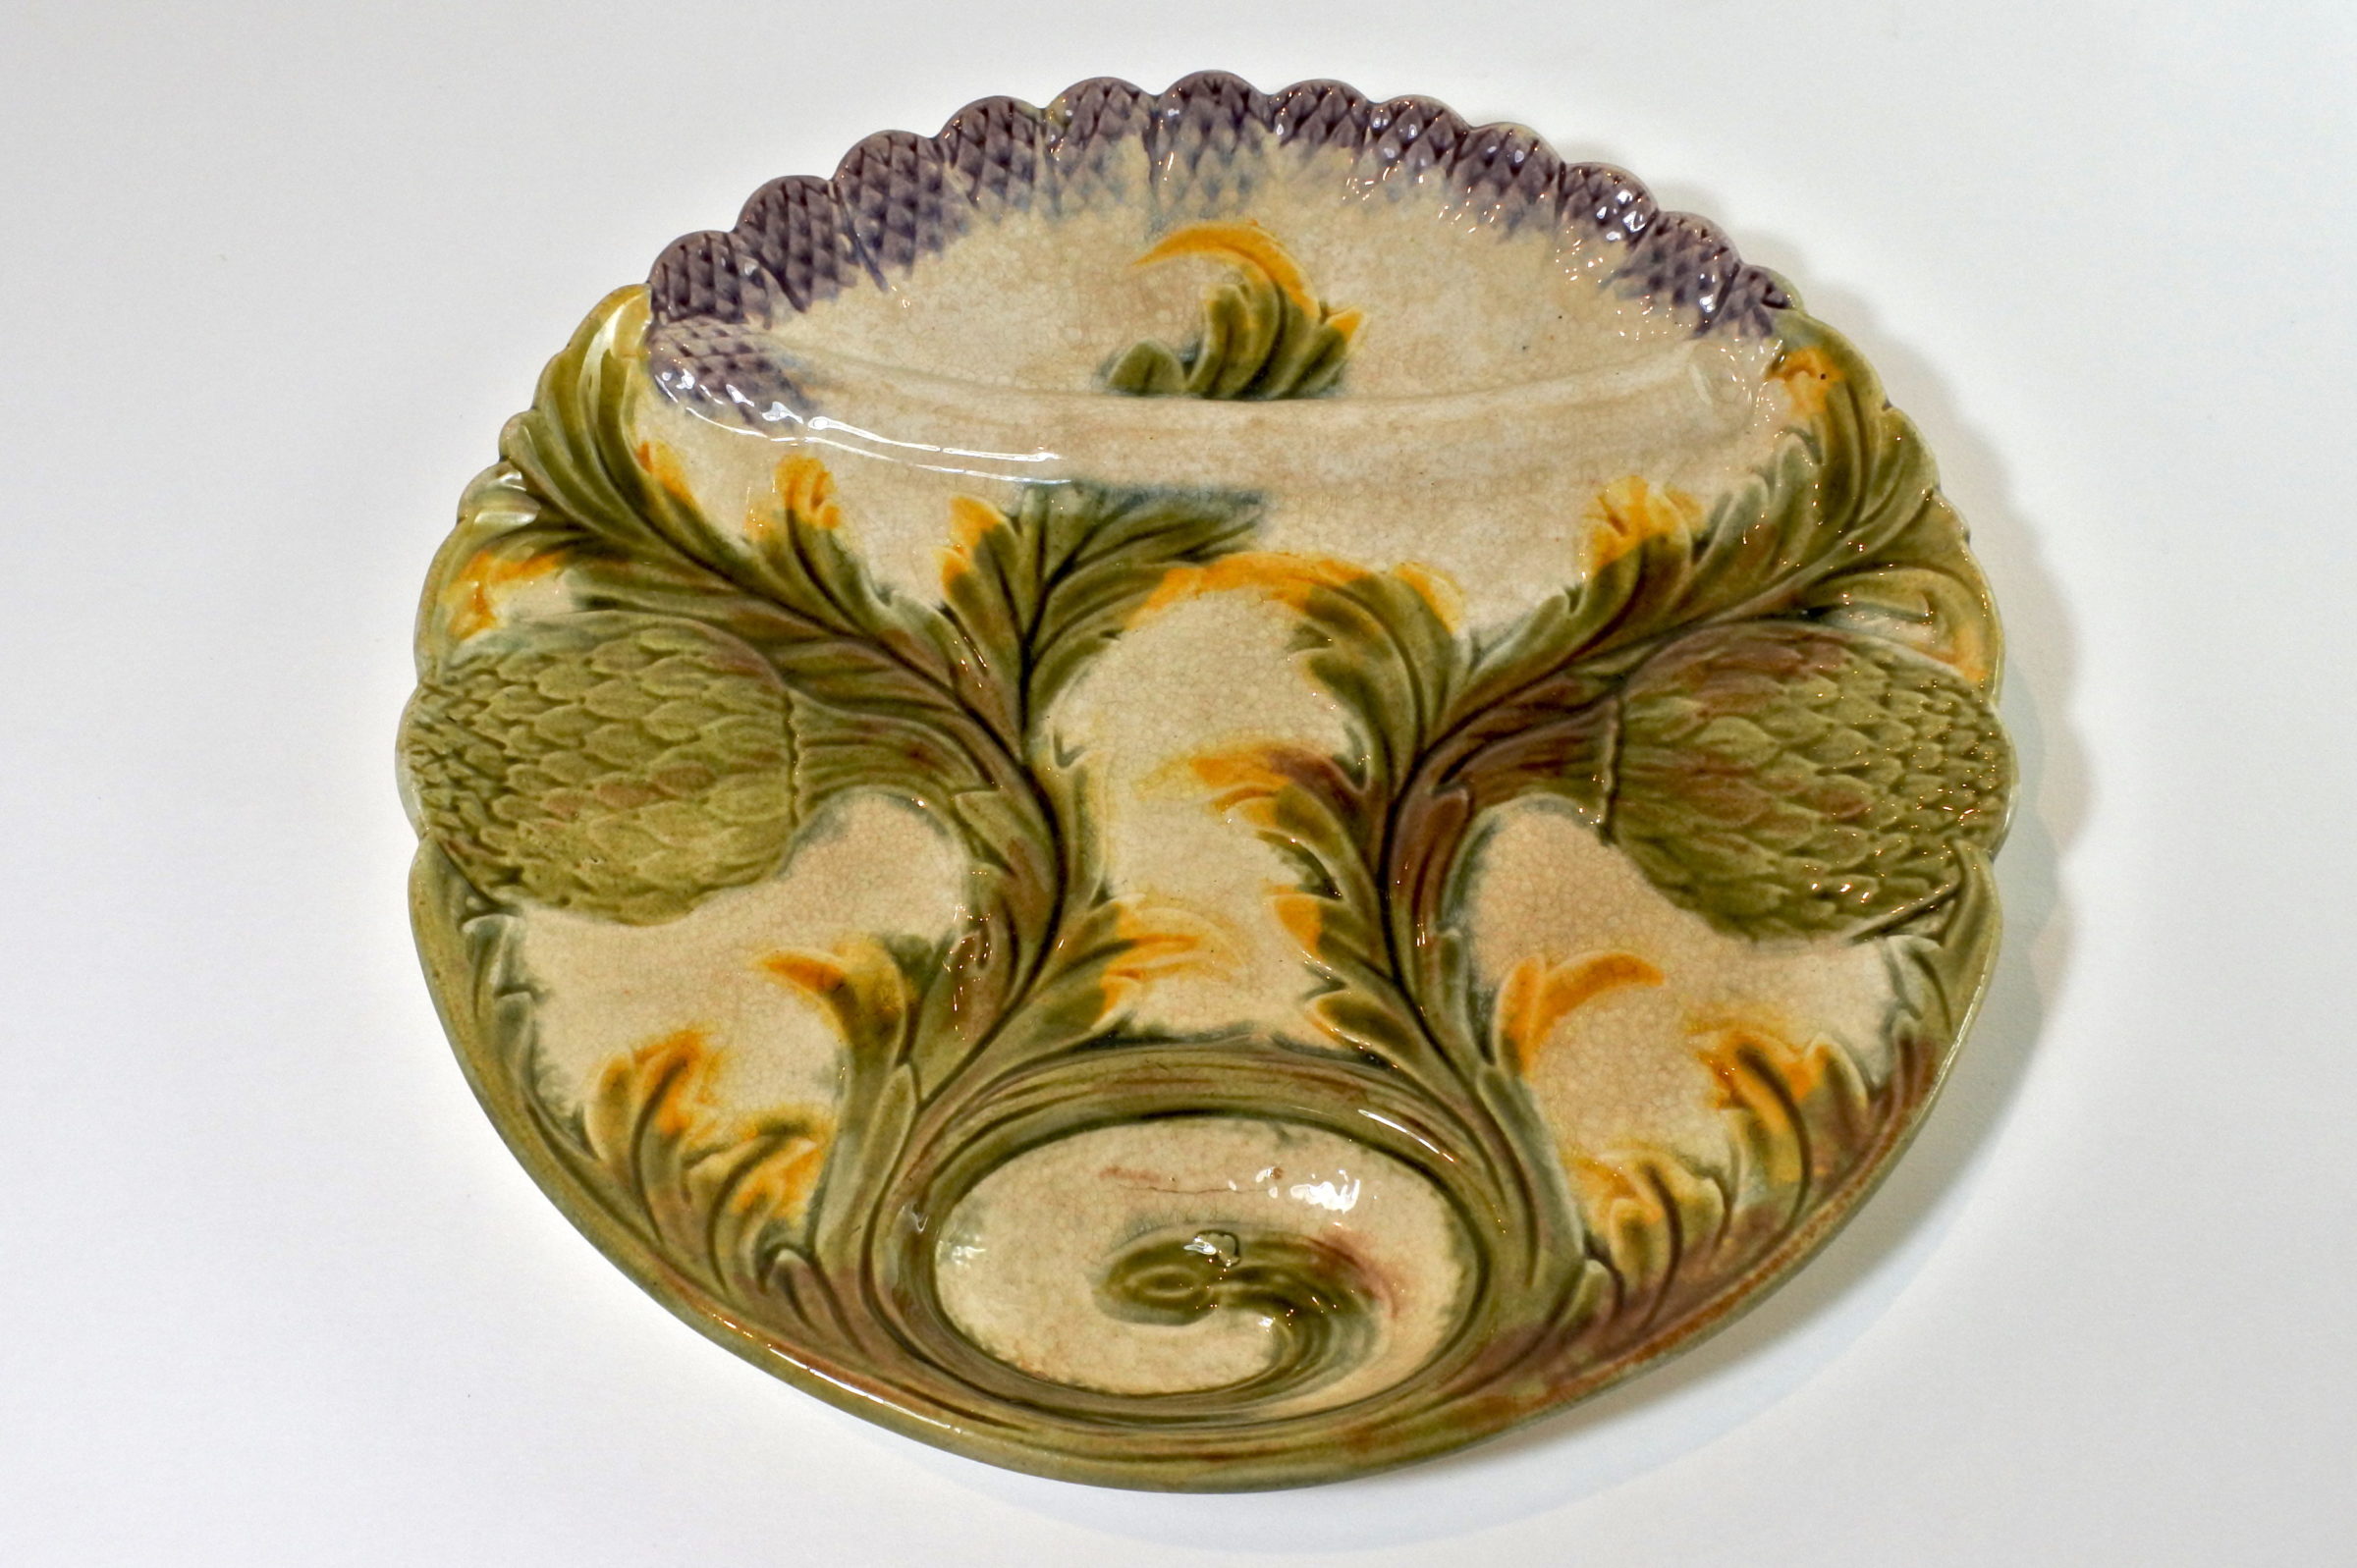 Piatto in ceramica barbotine per asparagi e carciofi - Lunéville Keller et Guérin